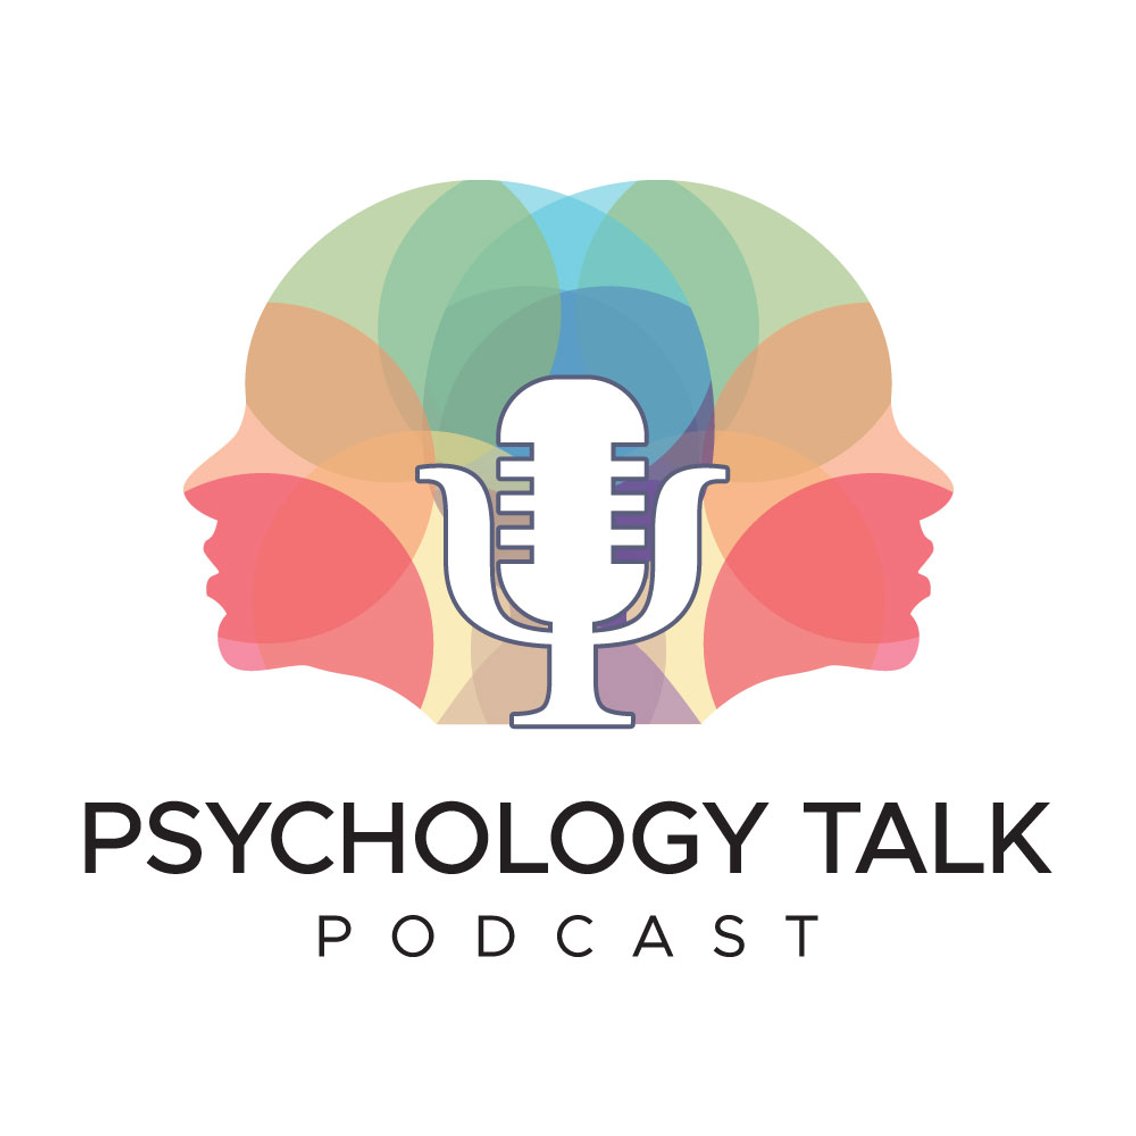 Psychology Talk Podcast - Cover Image